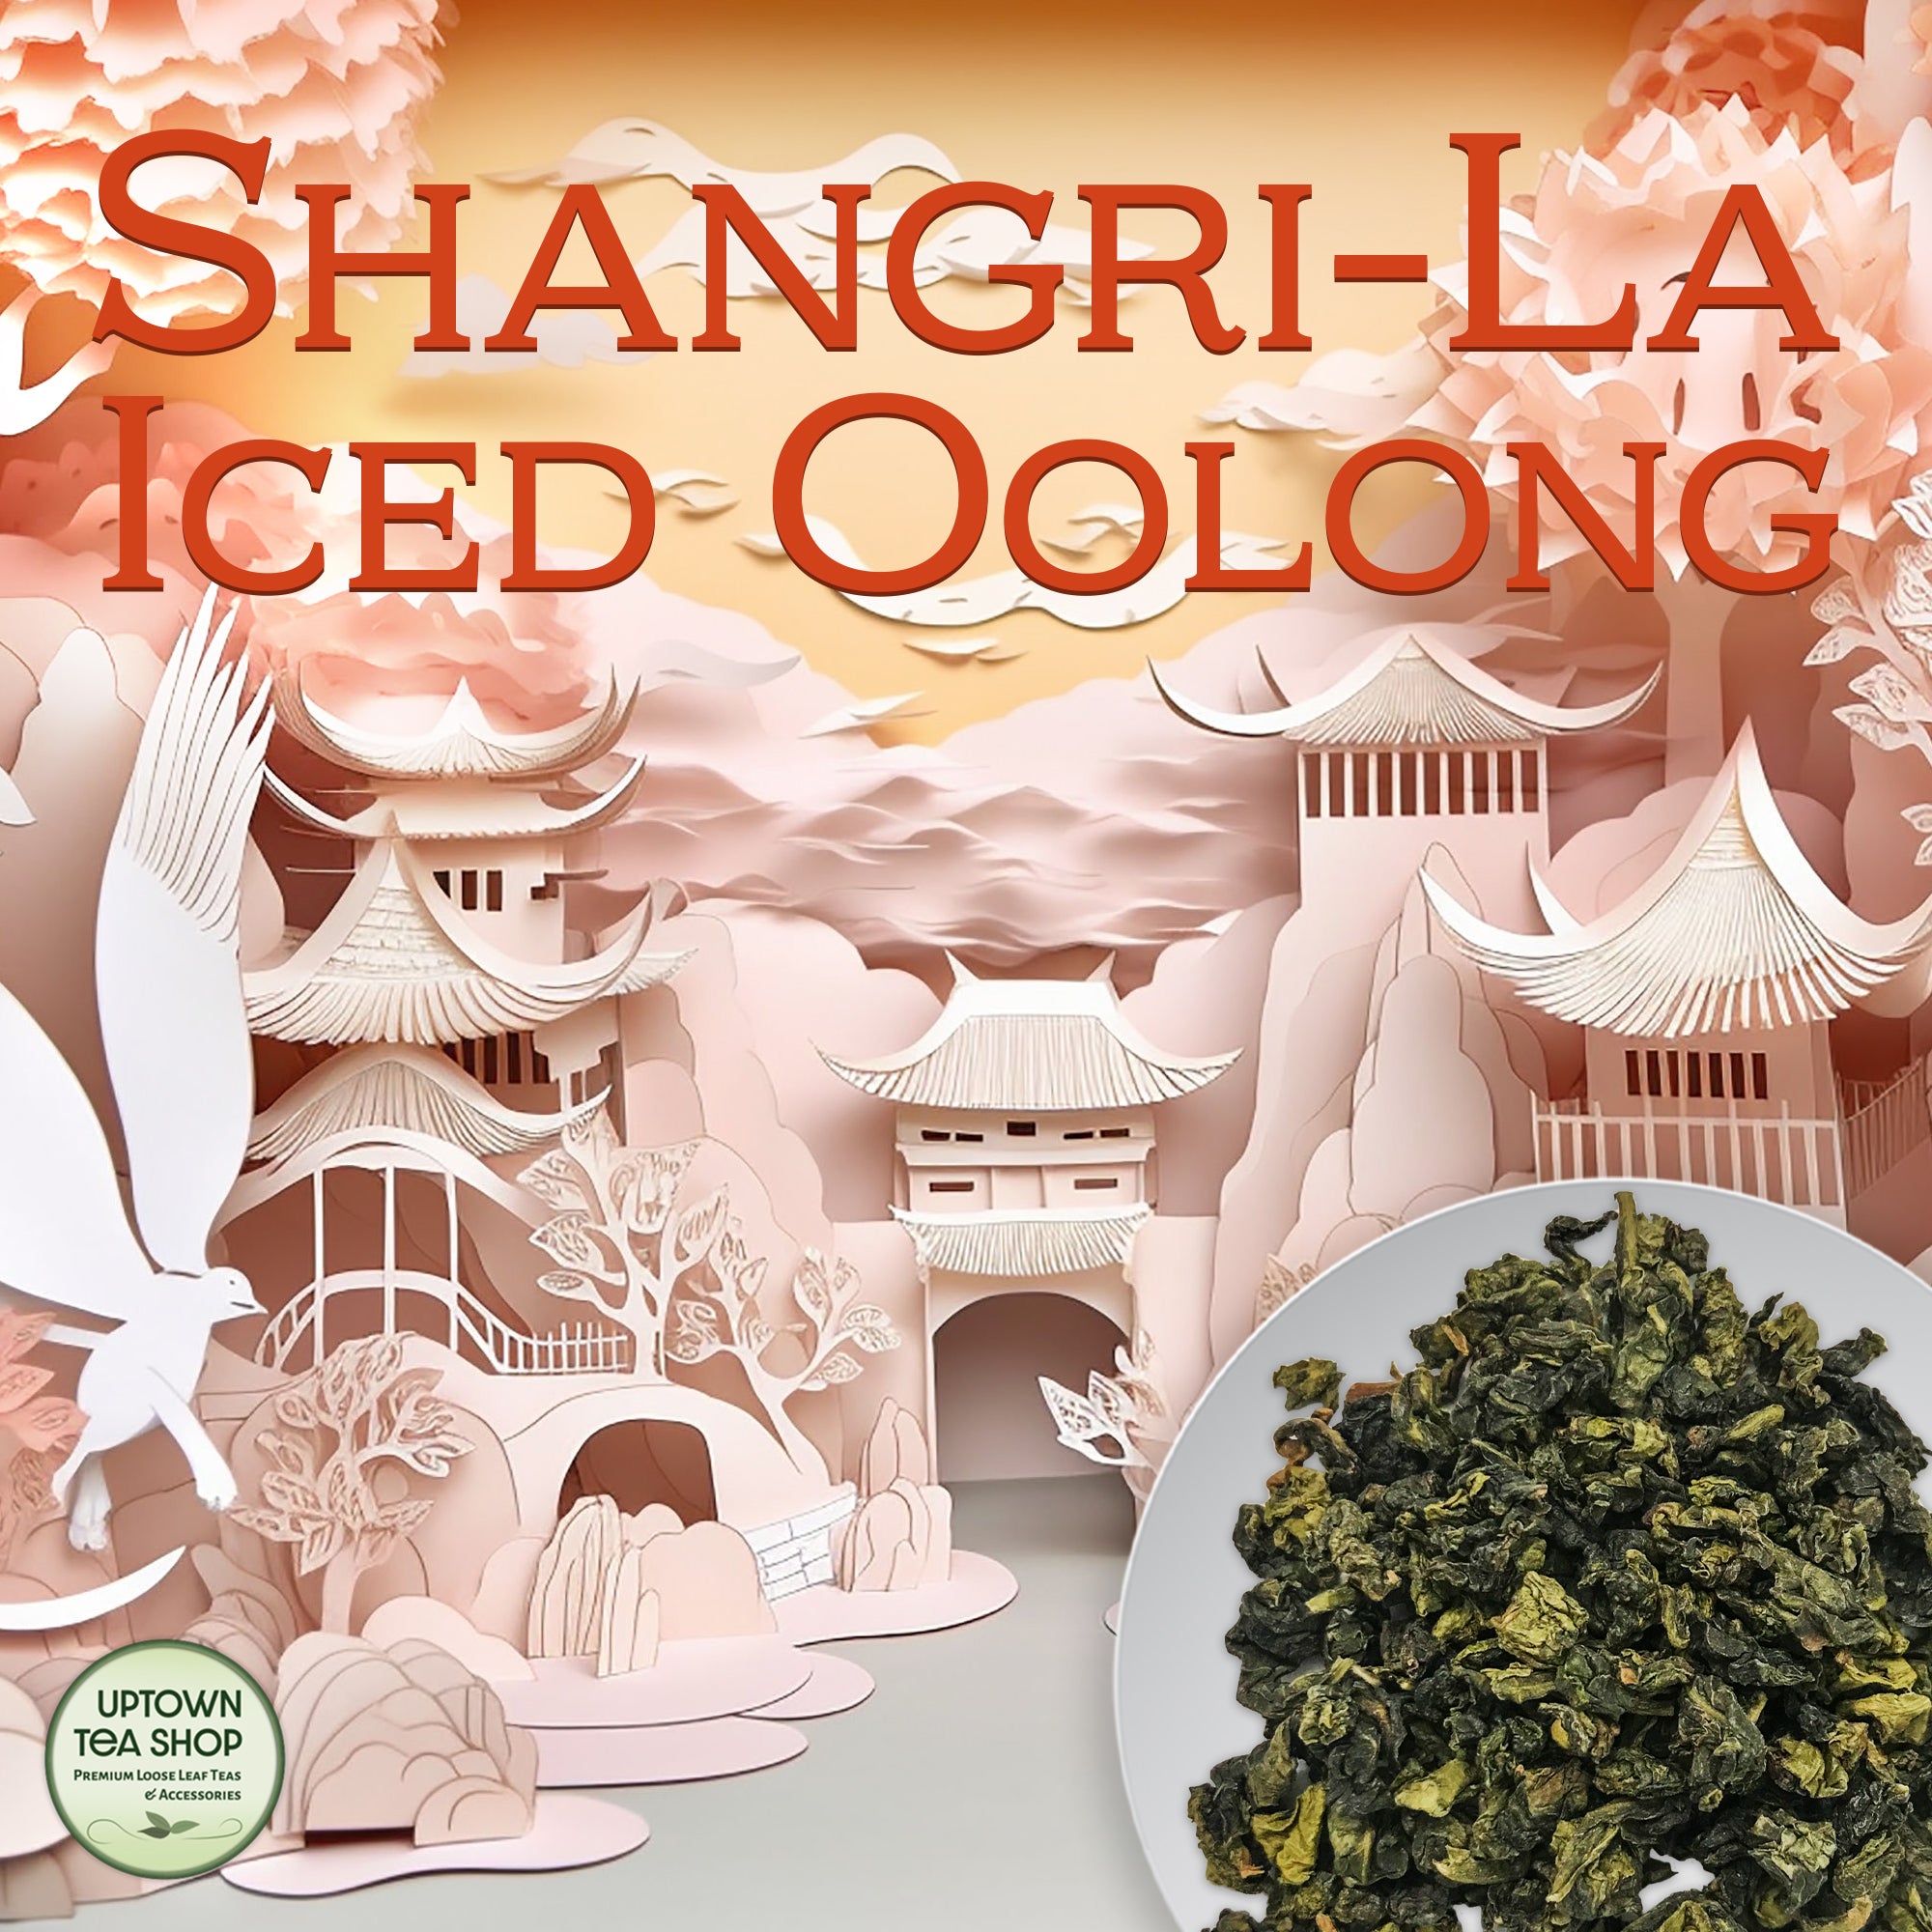 Shangri-La Iced Oolong